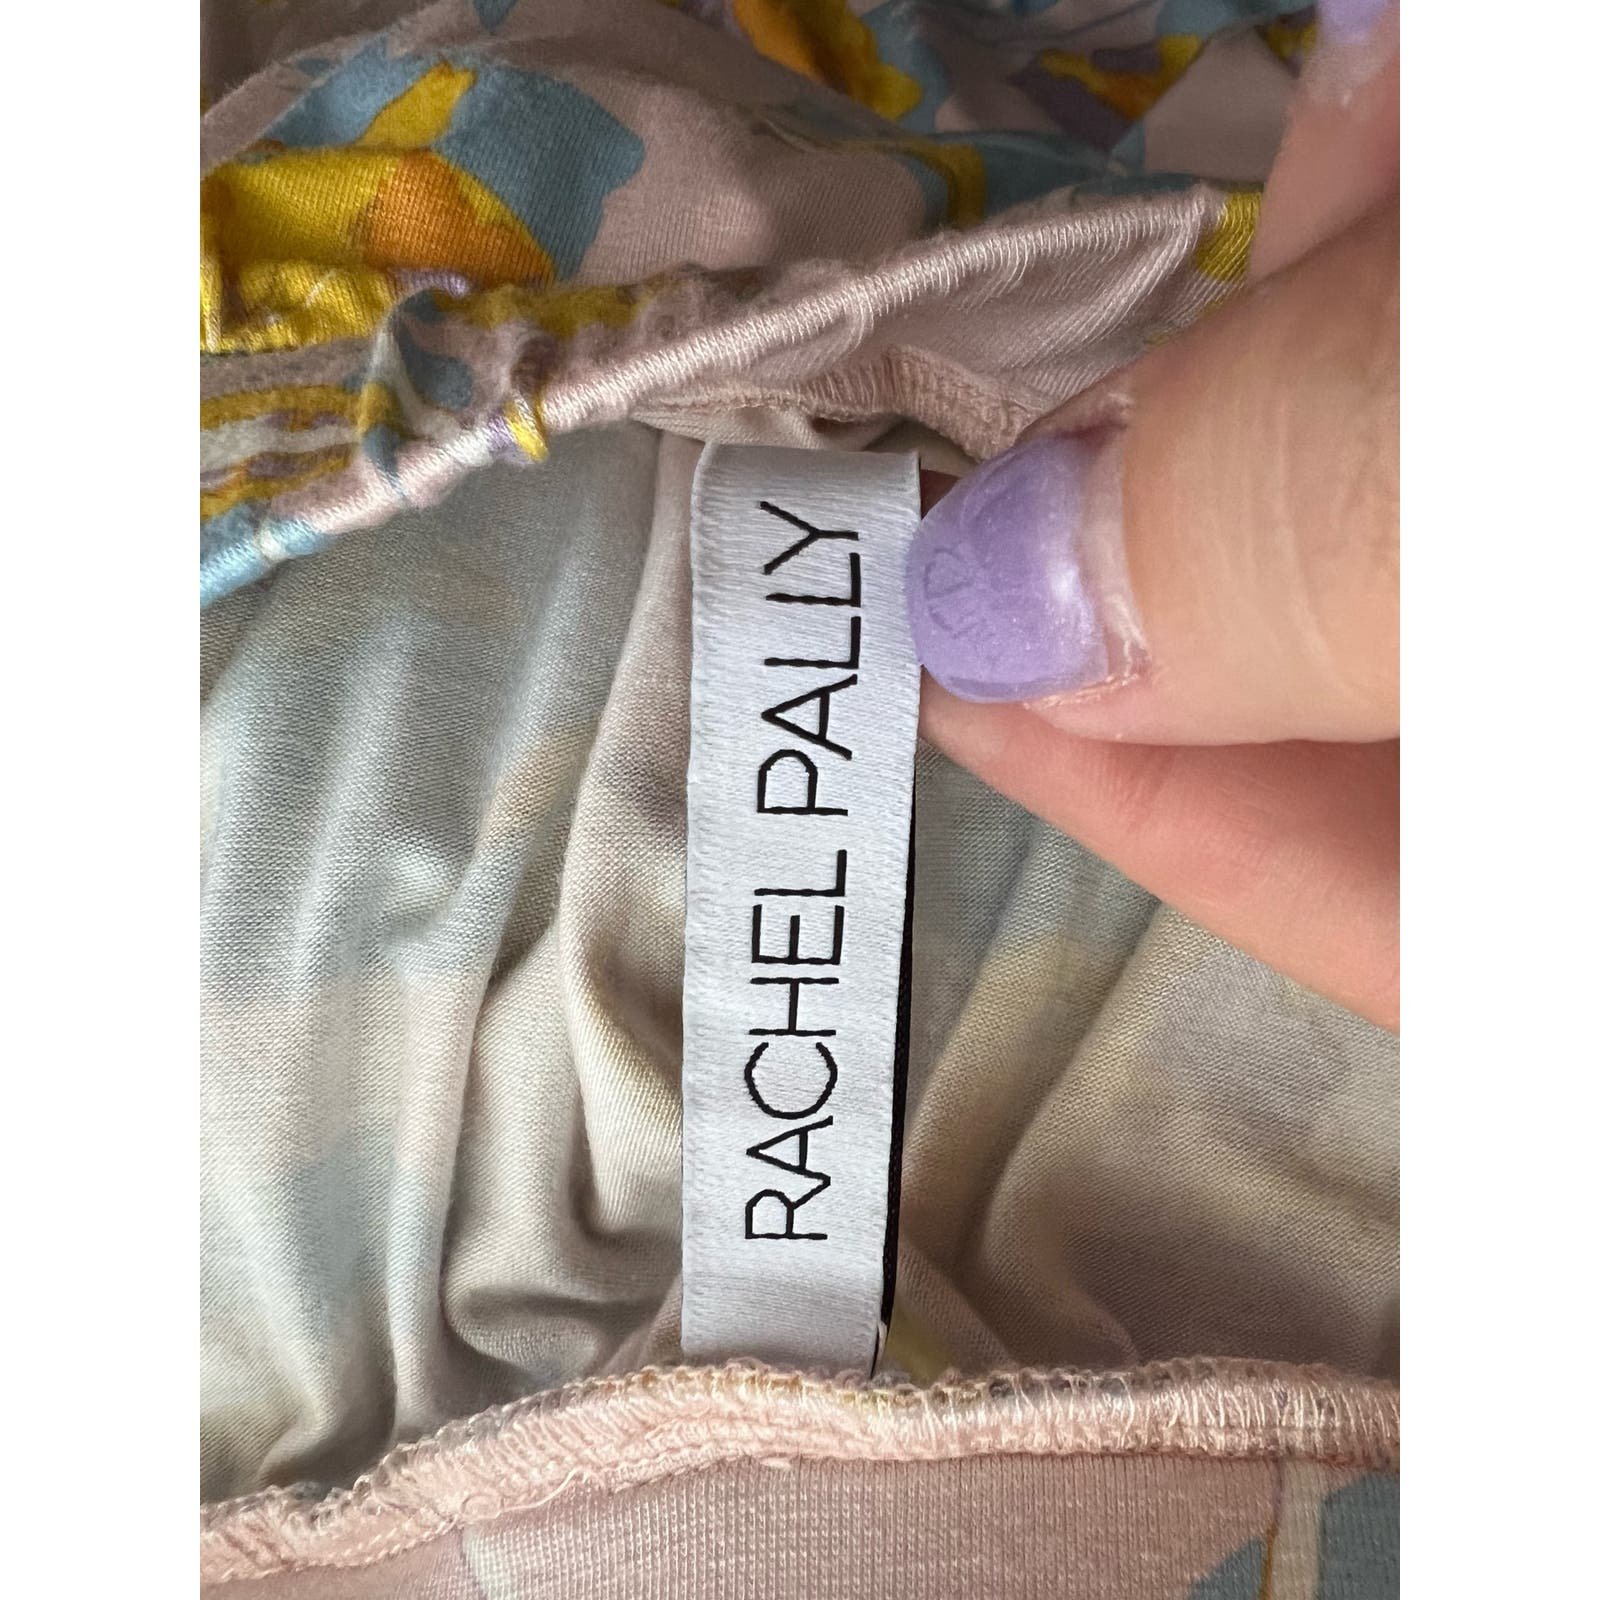 Popular Rachel Pally Women´s Floral Print A-Line Skirt Elastic Waist Multicolor SZ XS PjHOoPqfc on sale